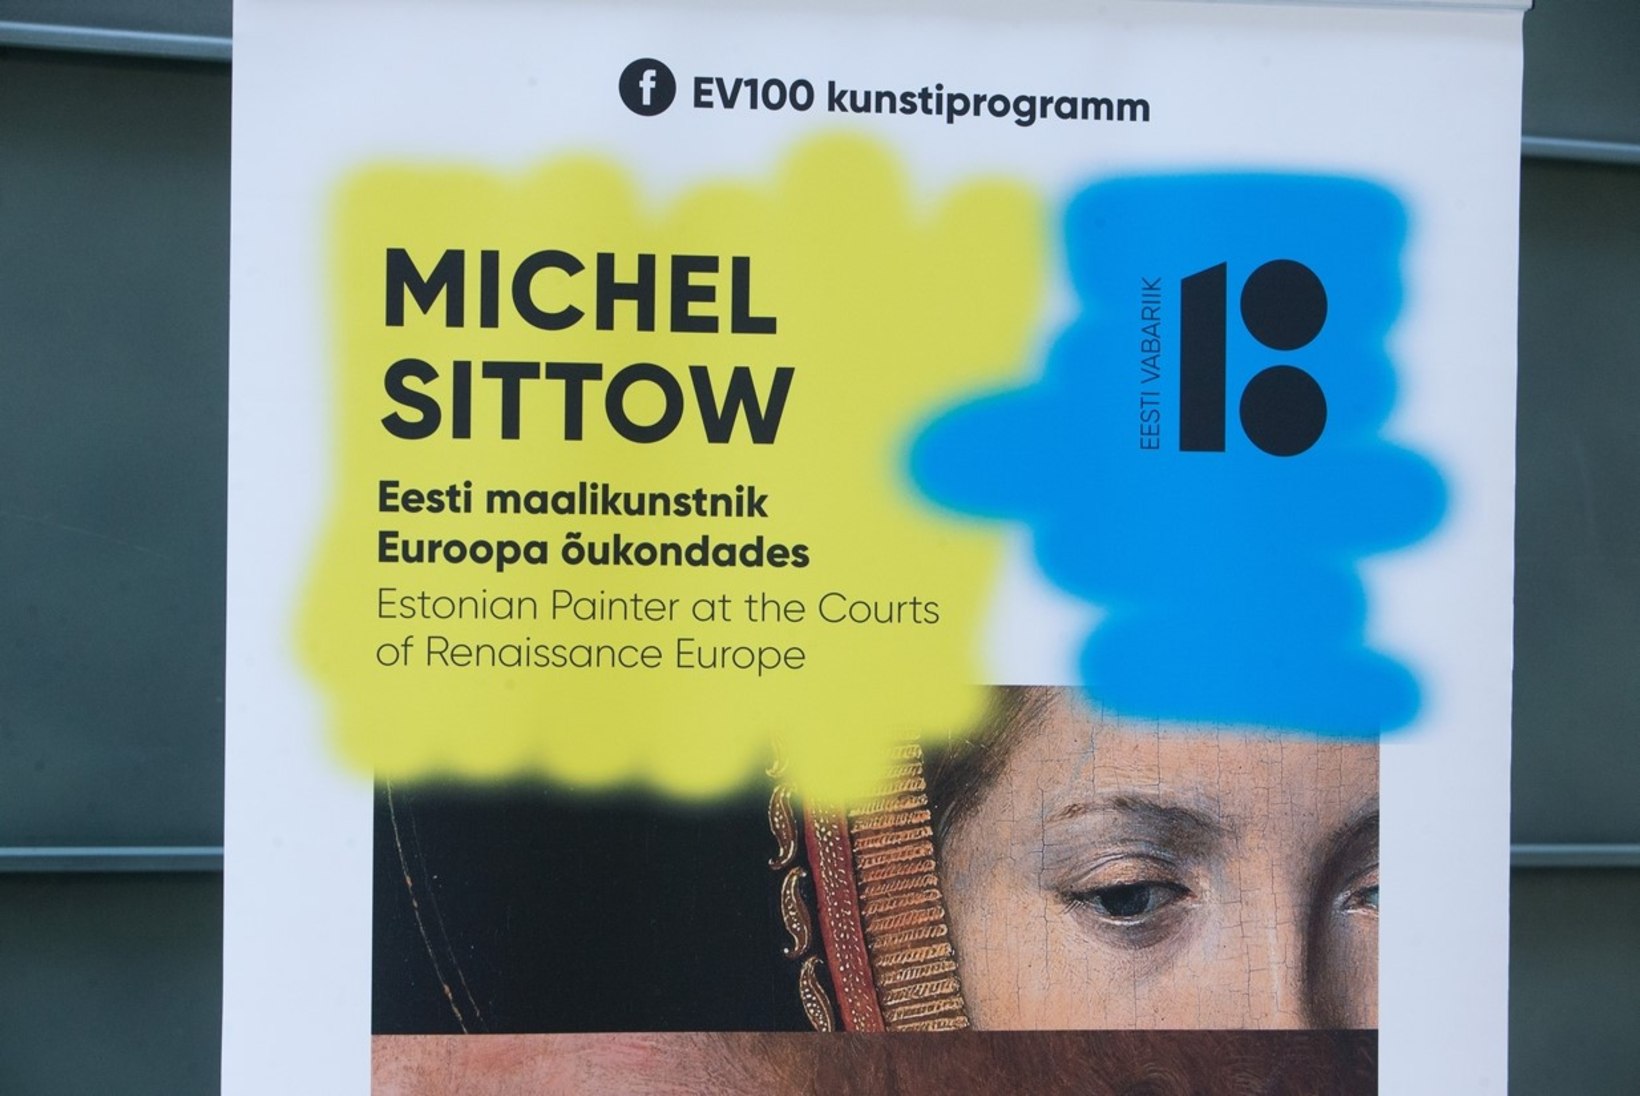 GALERII | Kumus avati Michel Sittowi esimene isikunäitus